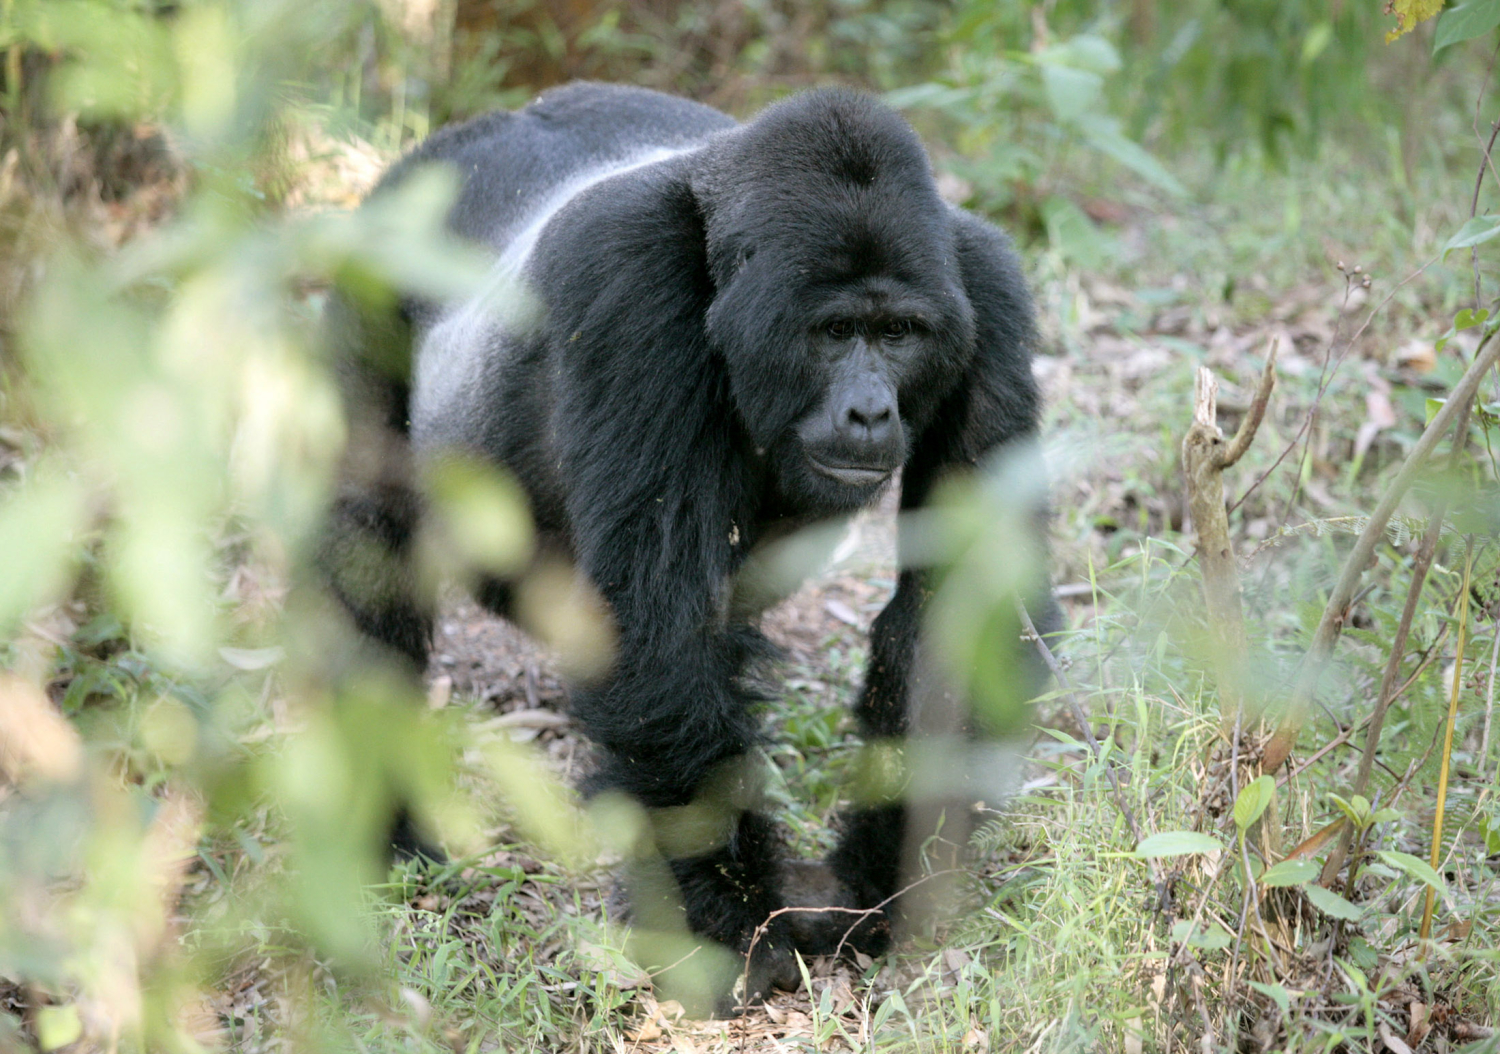 Una negligencia humana mata a otro gorila en peligro de extinción en México